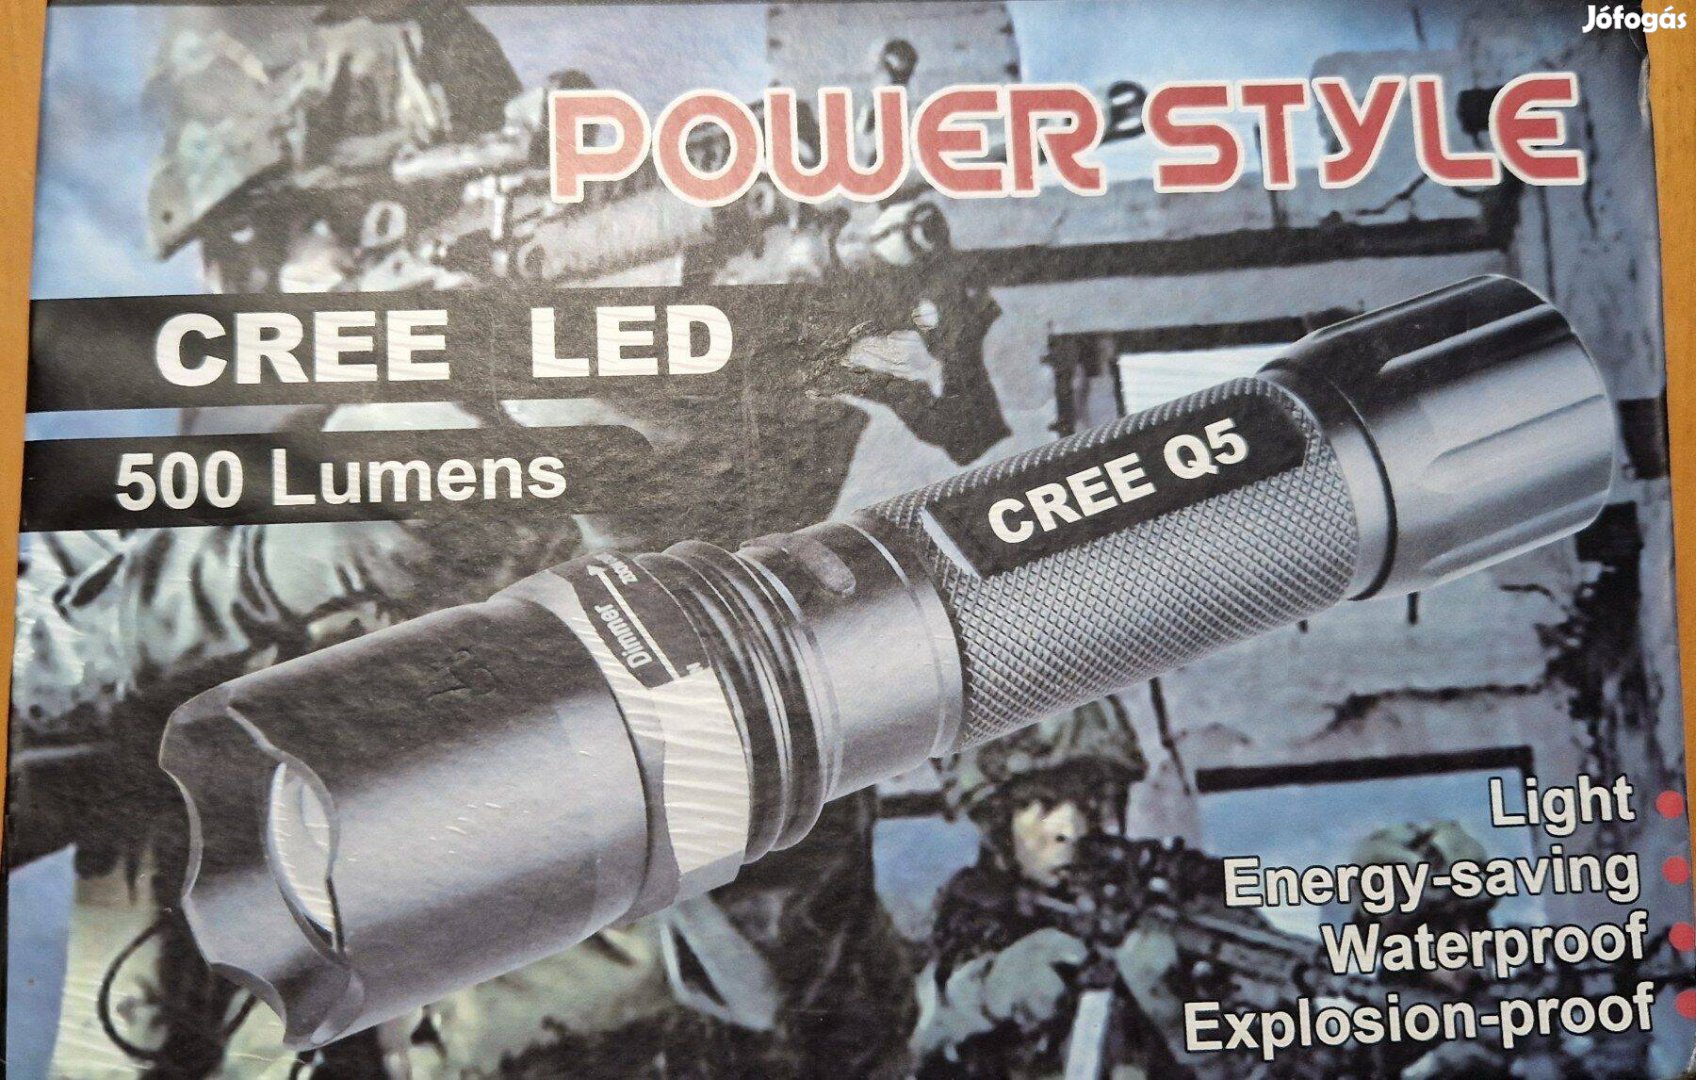 Cree LED Elemlámpa Power Style